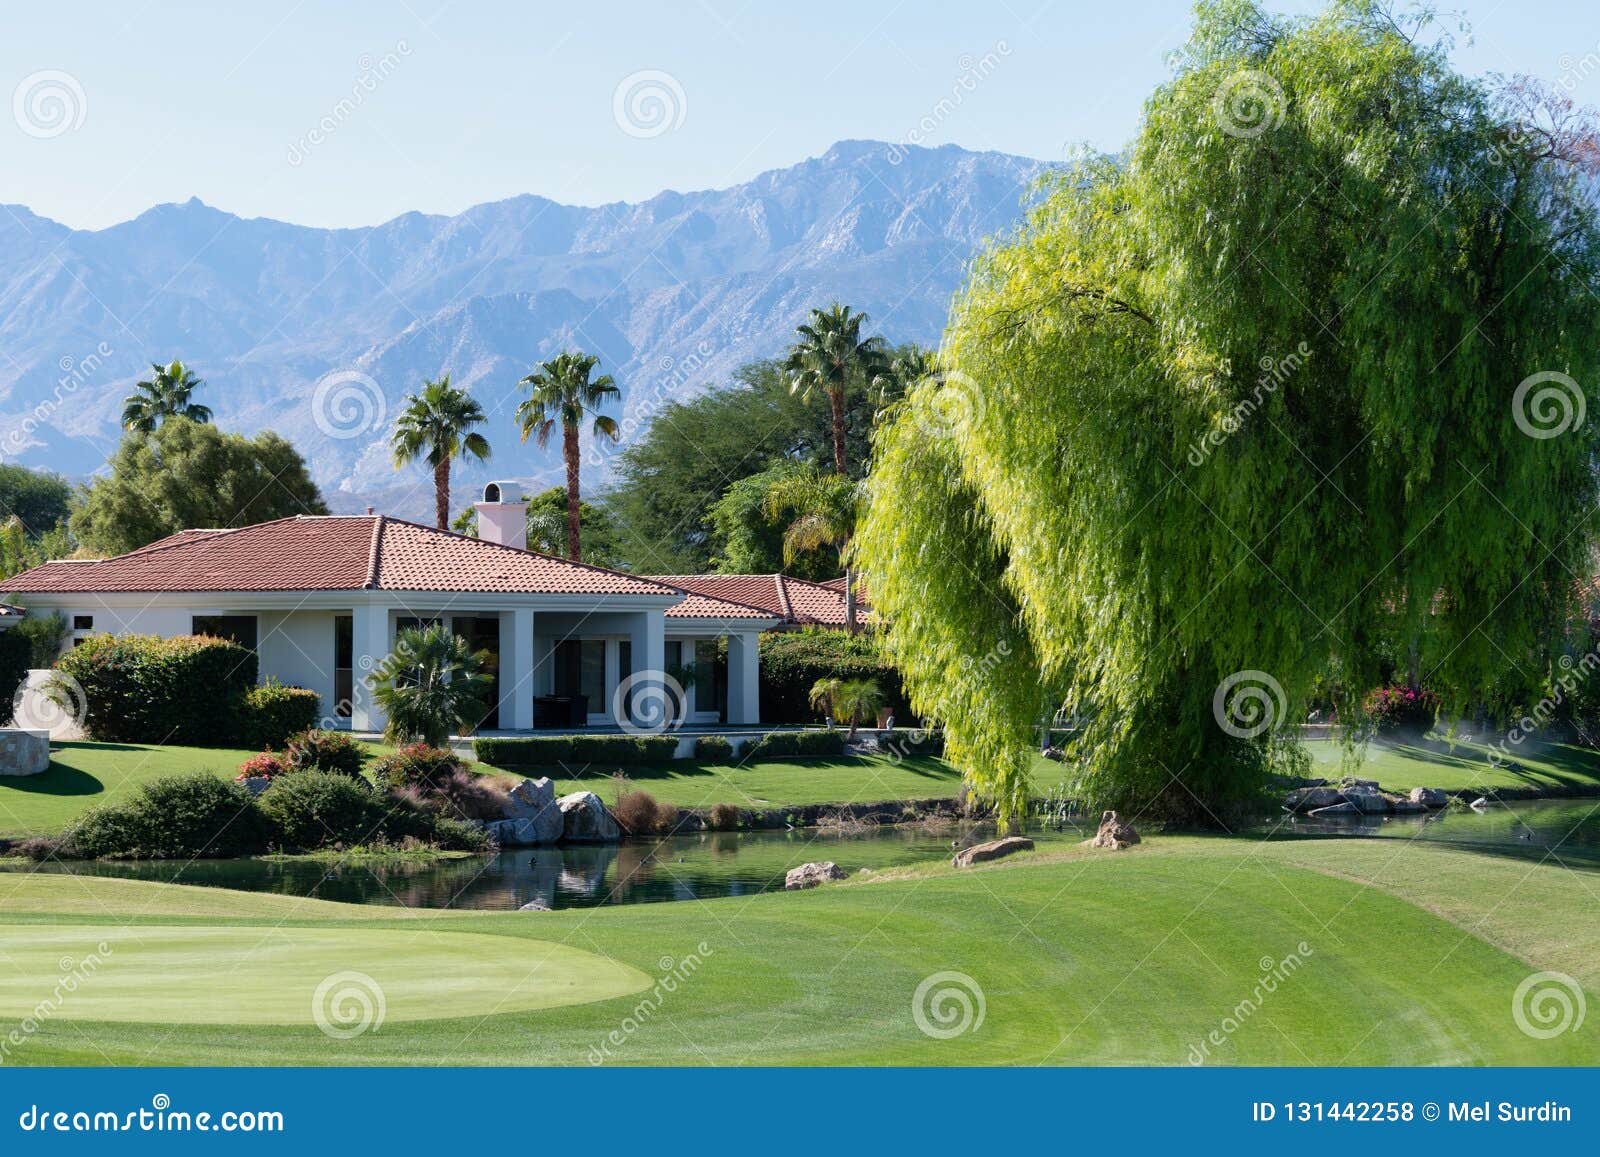 Gary Player Golf Course Rancho Mirage. Sikt av den farledGary Player Golf Course Rancho hägringen, Kalifornien